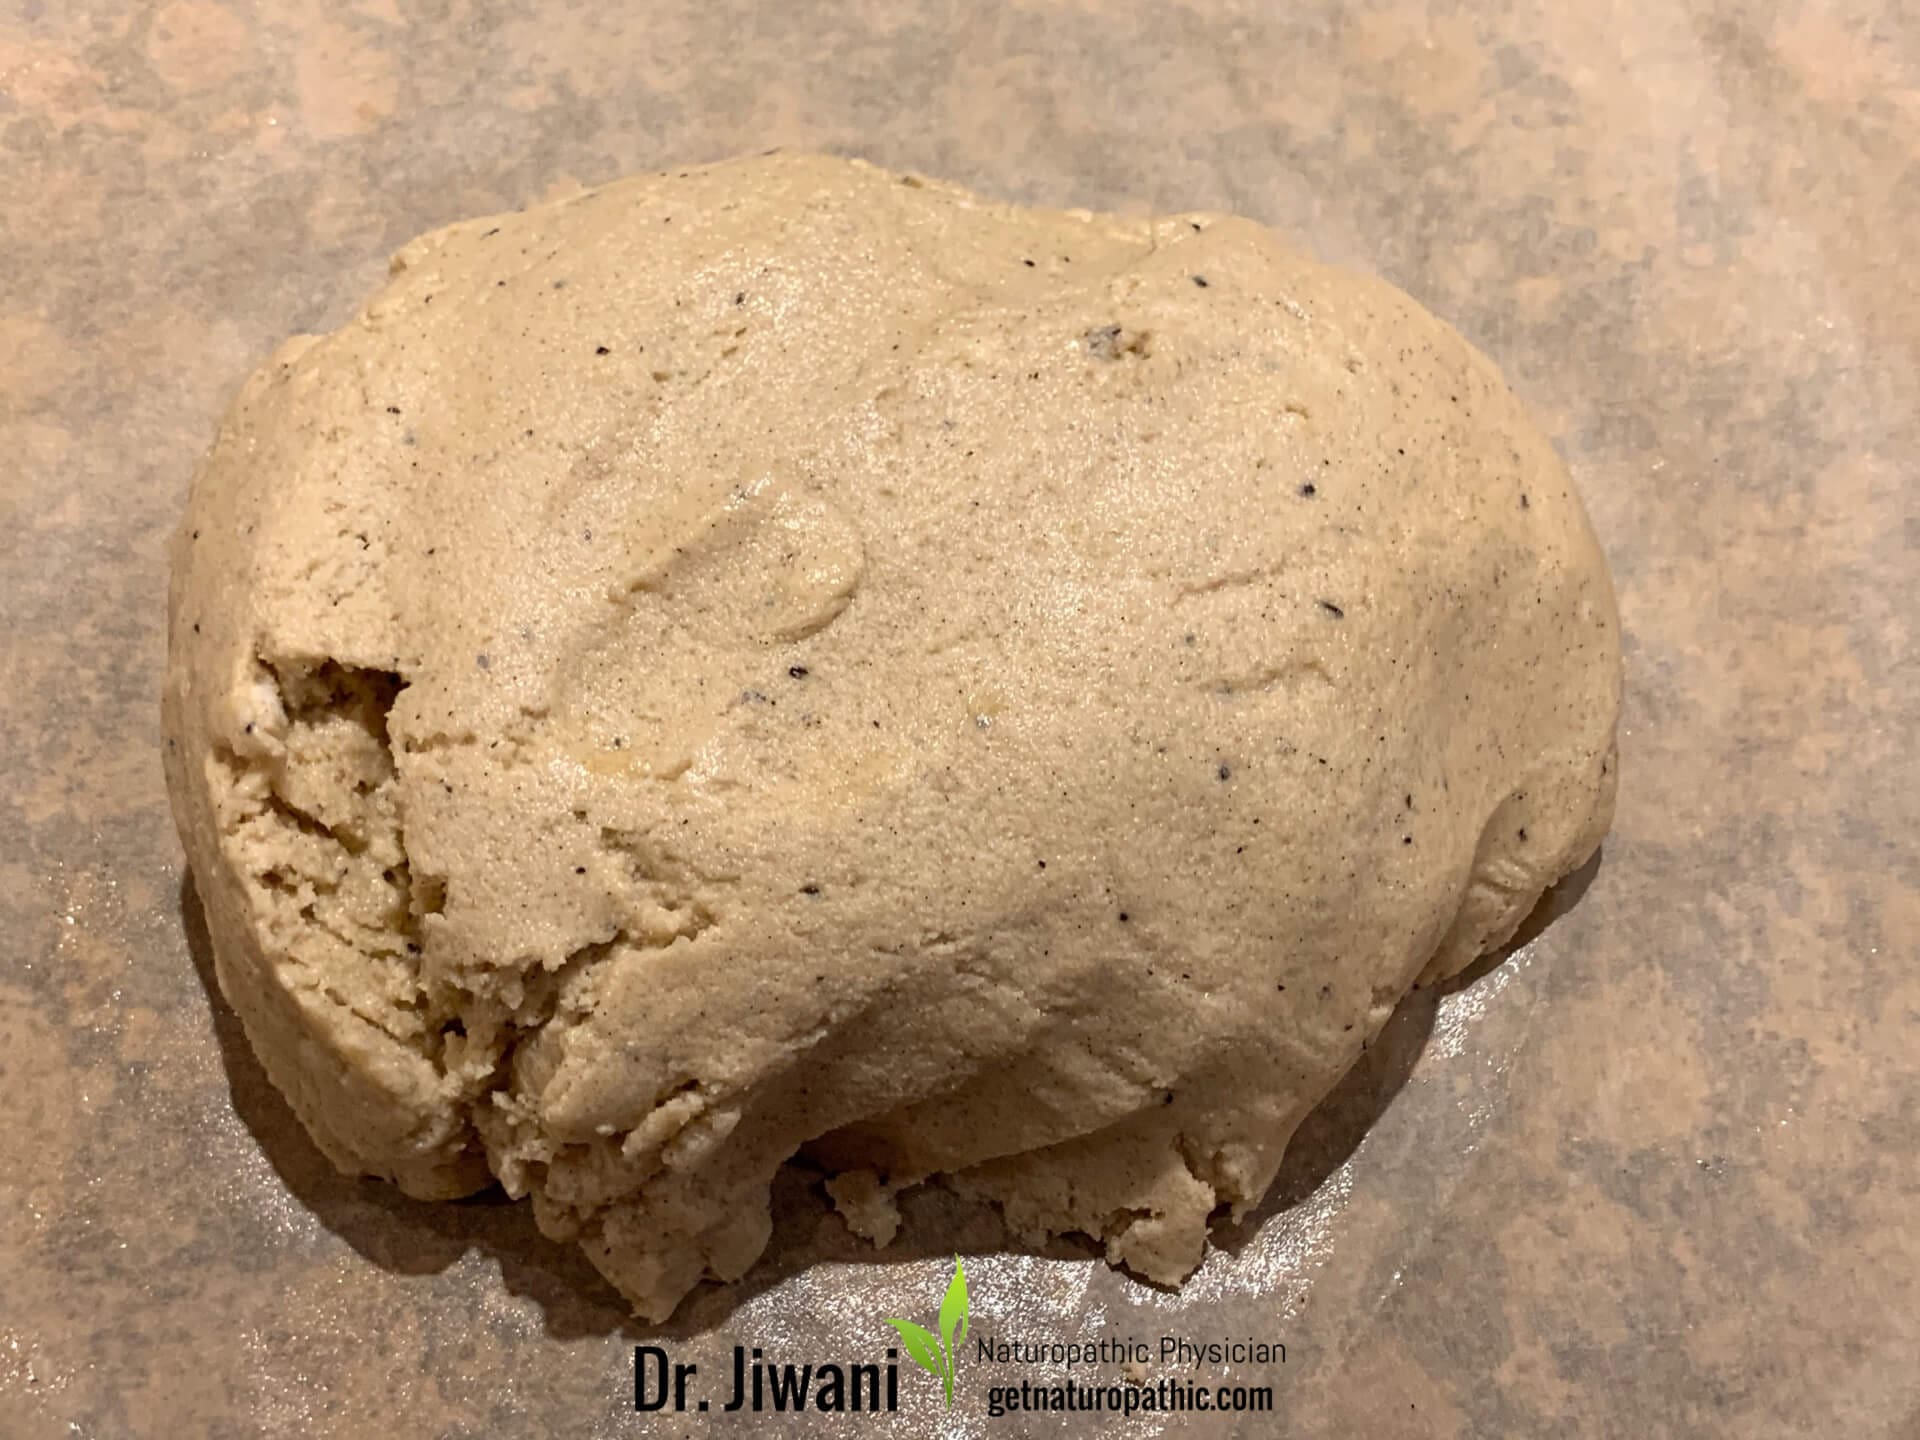 Recipe: Dr. Jiwani's Keto Vegan Shortbread Cookies 9 | Dr. Jiwani's Naturopathic Nuggets Blog